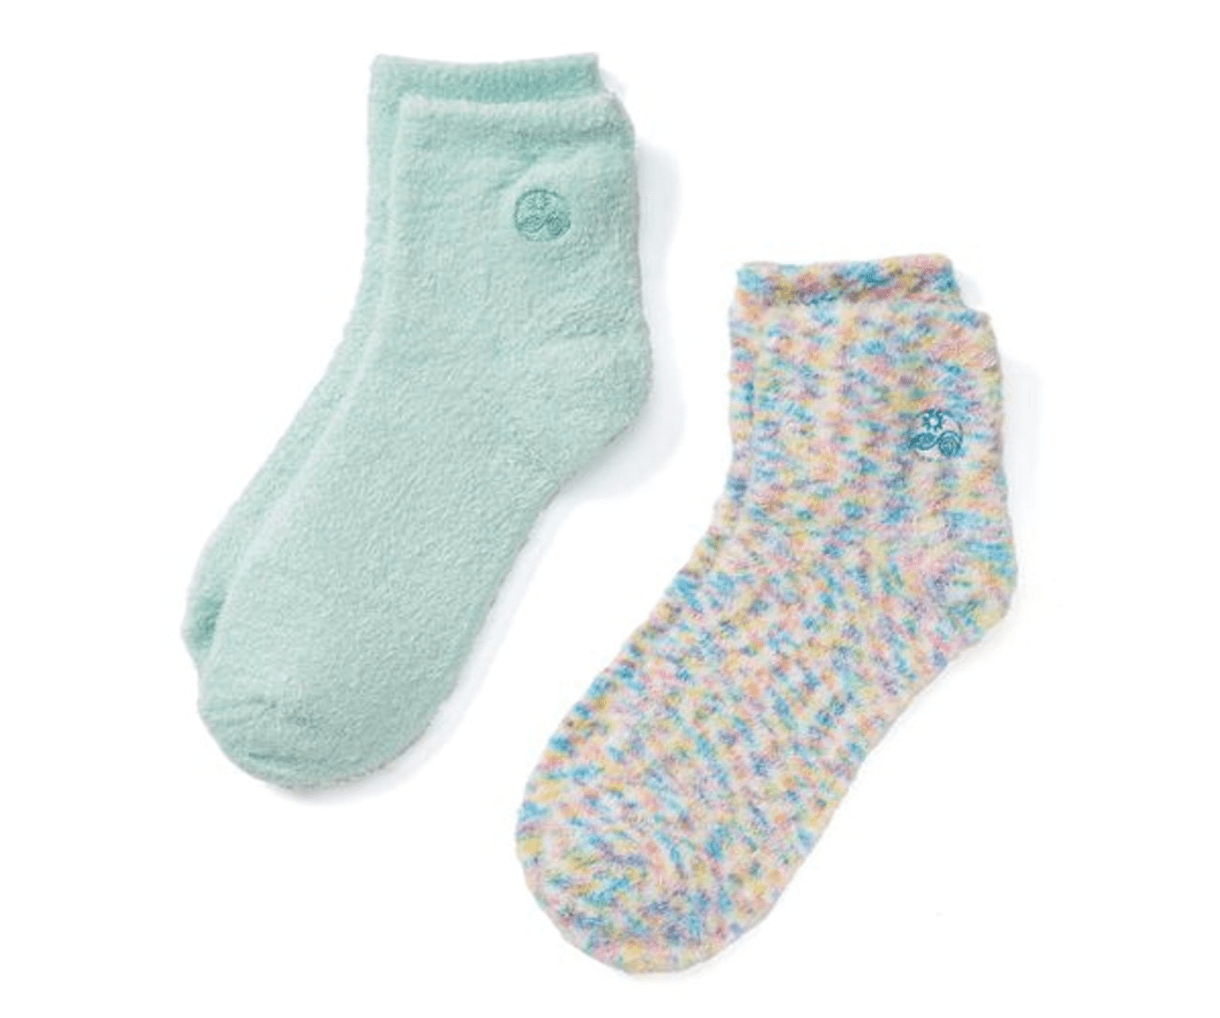 Earth Therapeutics Aloe Socks Are The Comfiest Fuzzy Socks I OwnHelloGiggles